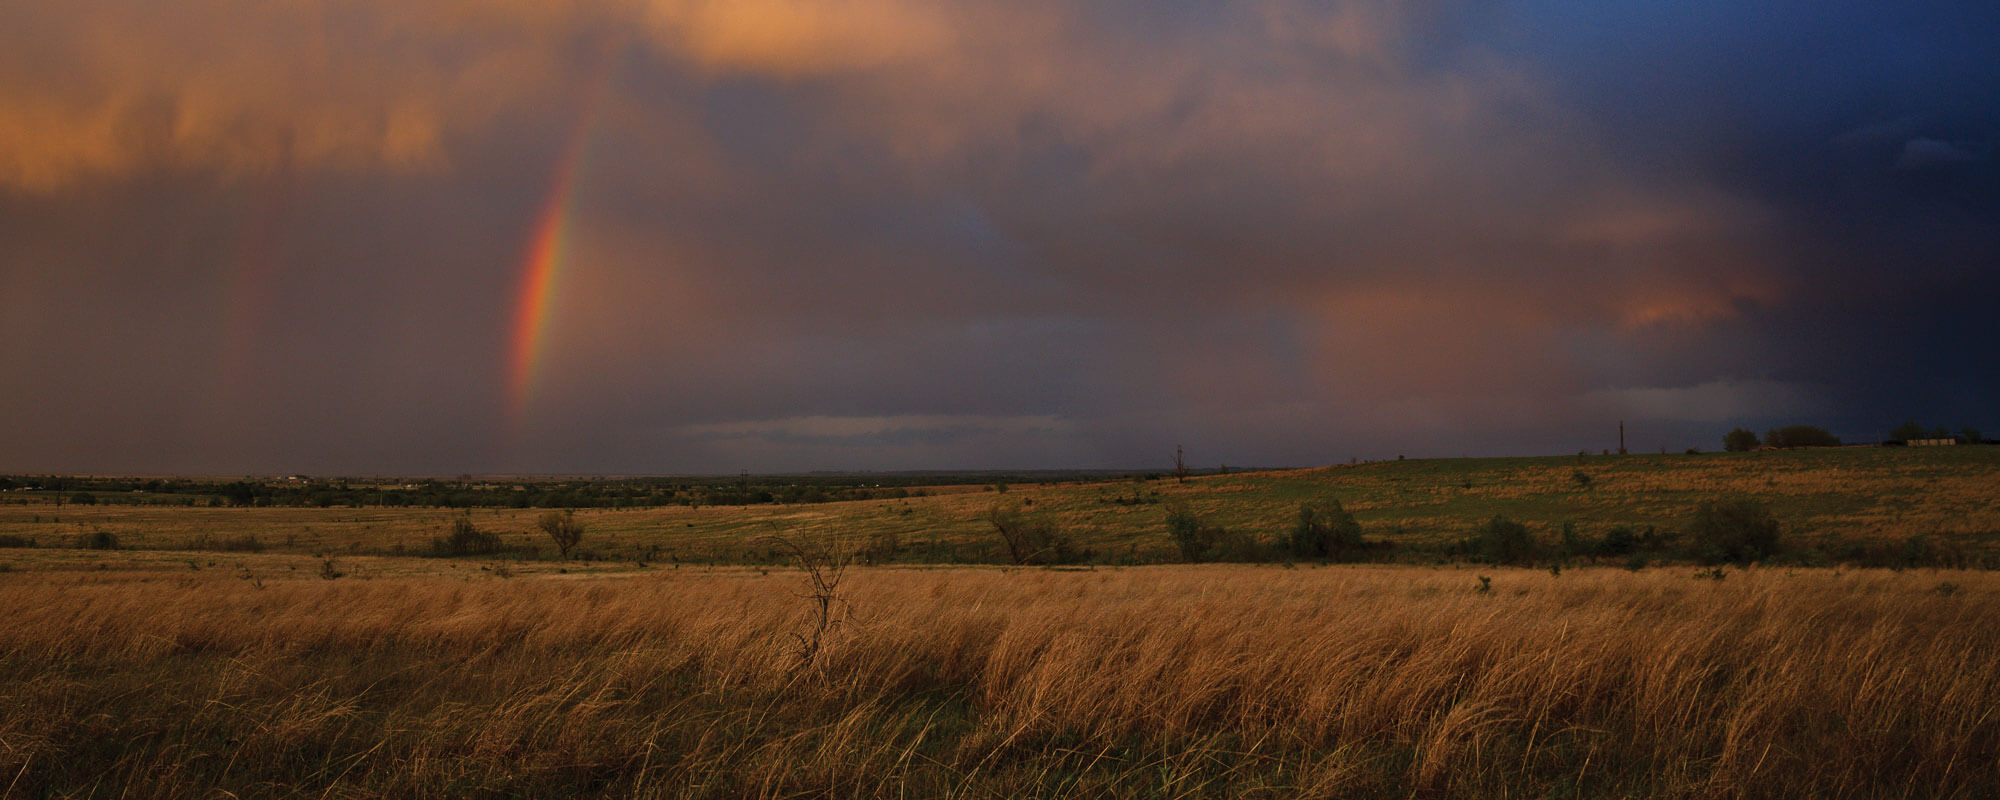 Rainbow over pasture after rainstorm